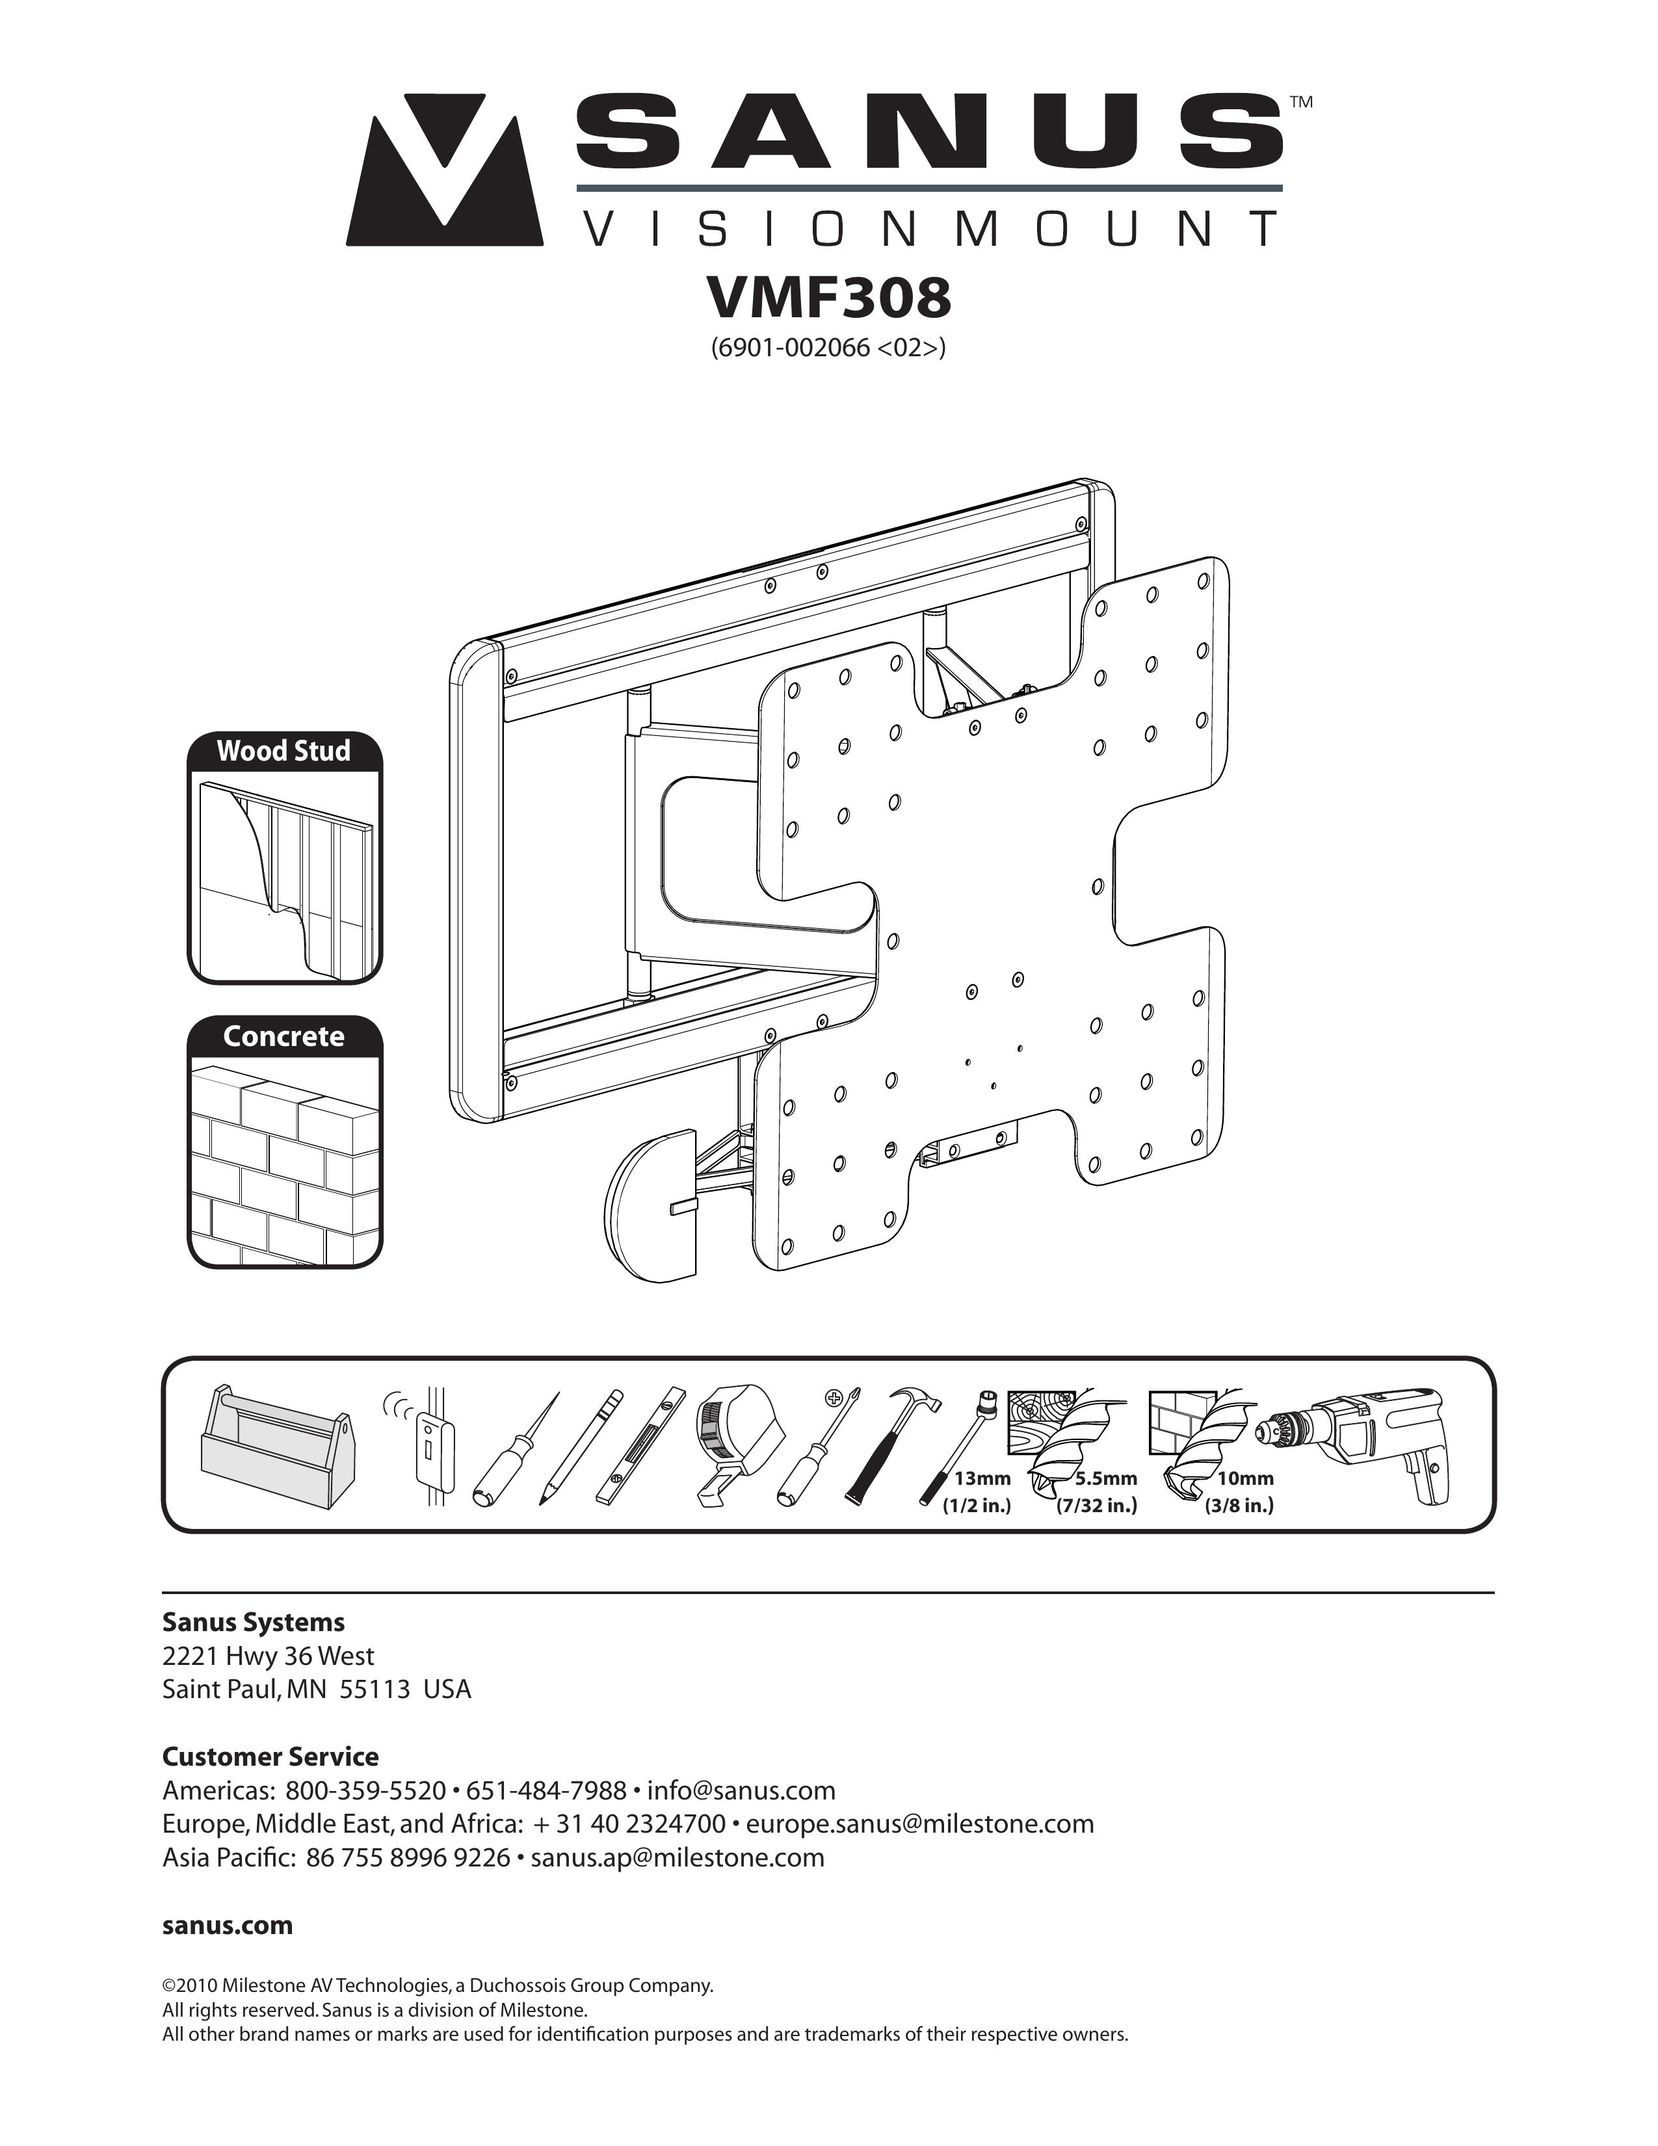 Sanus Systems VMF308 TV Mount User Manual